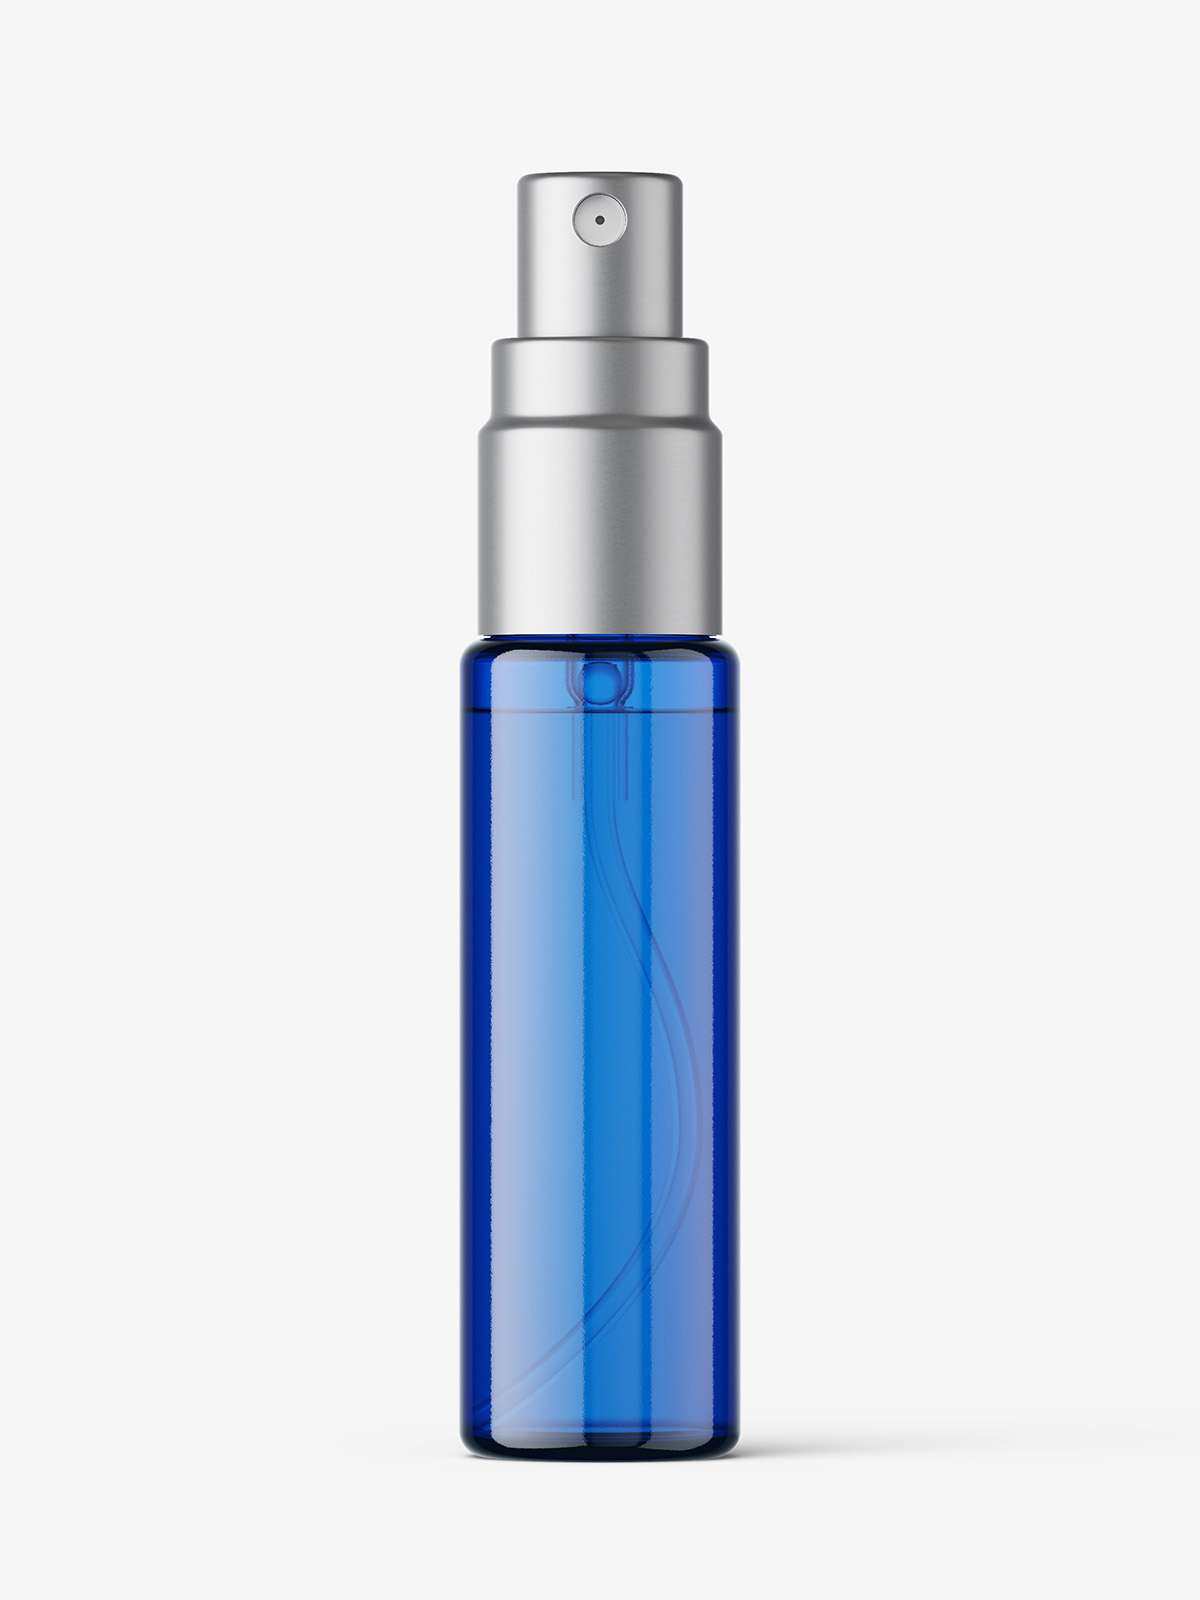 Download Blue Spray Bottle Mockup With Metallic Cap Smarty Mockups